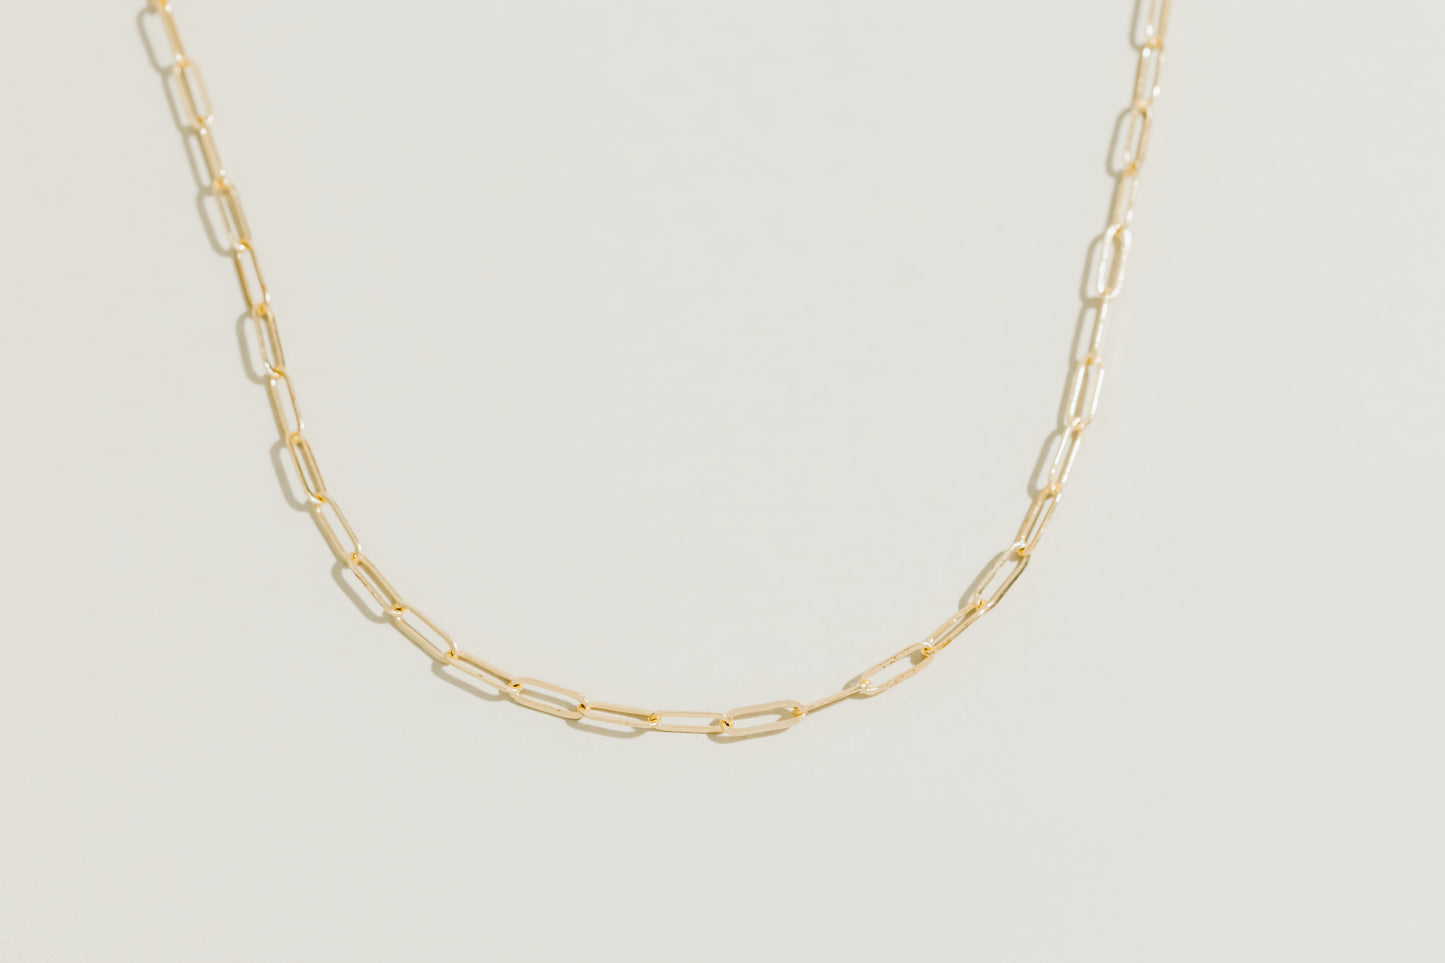 Custom size paper clip bracelet or necklace